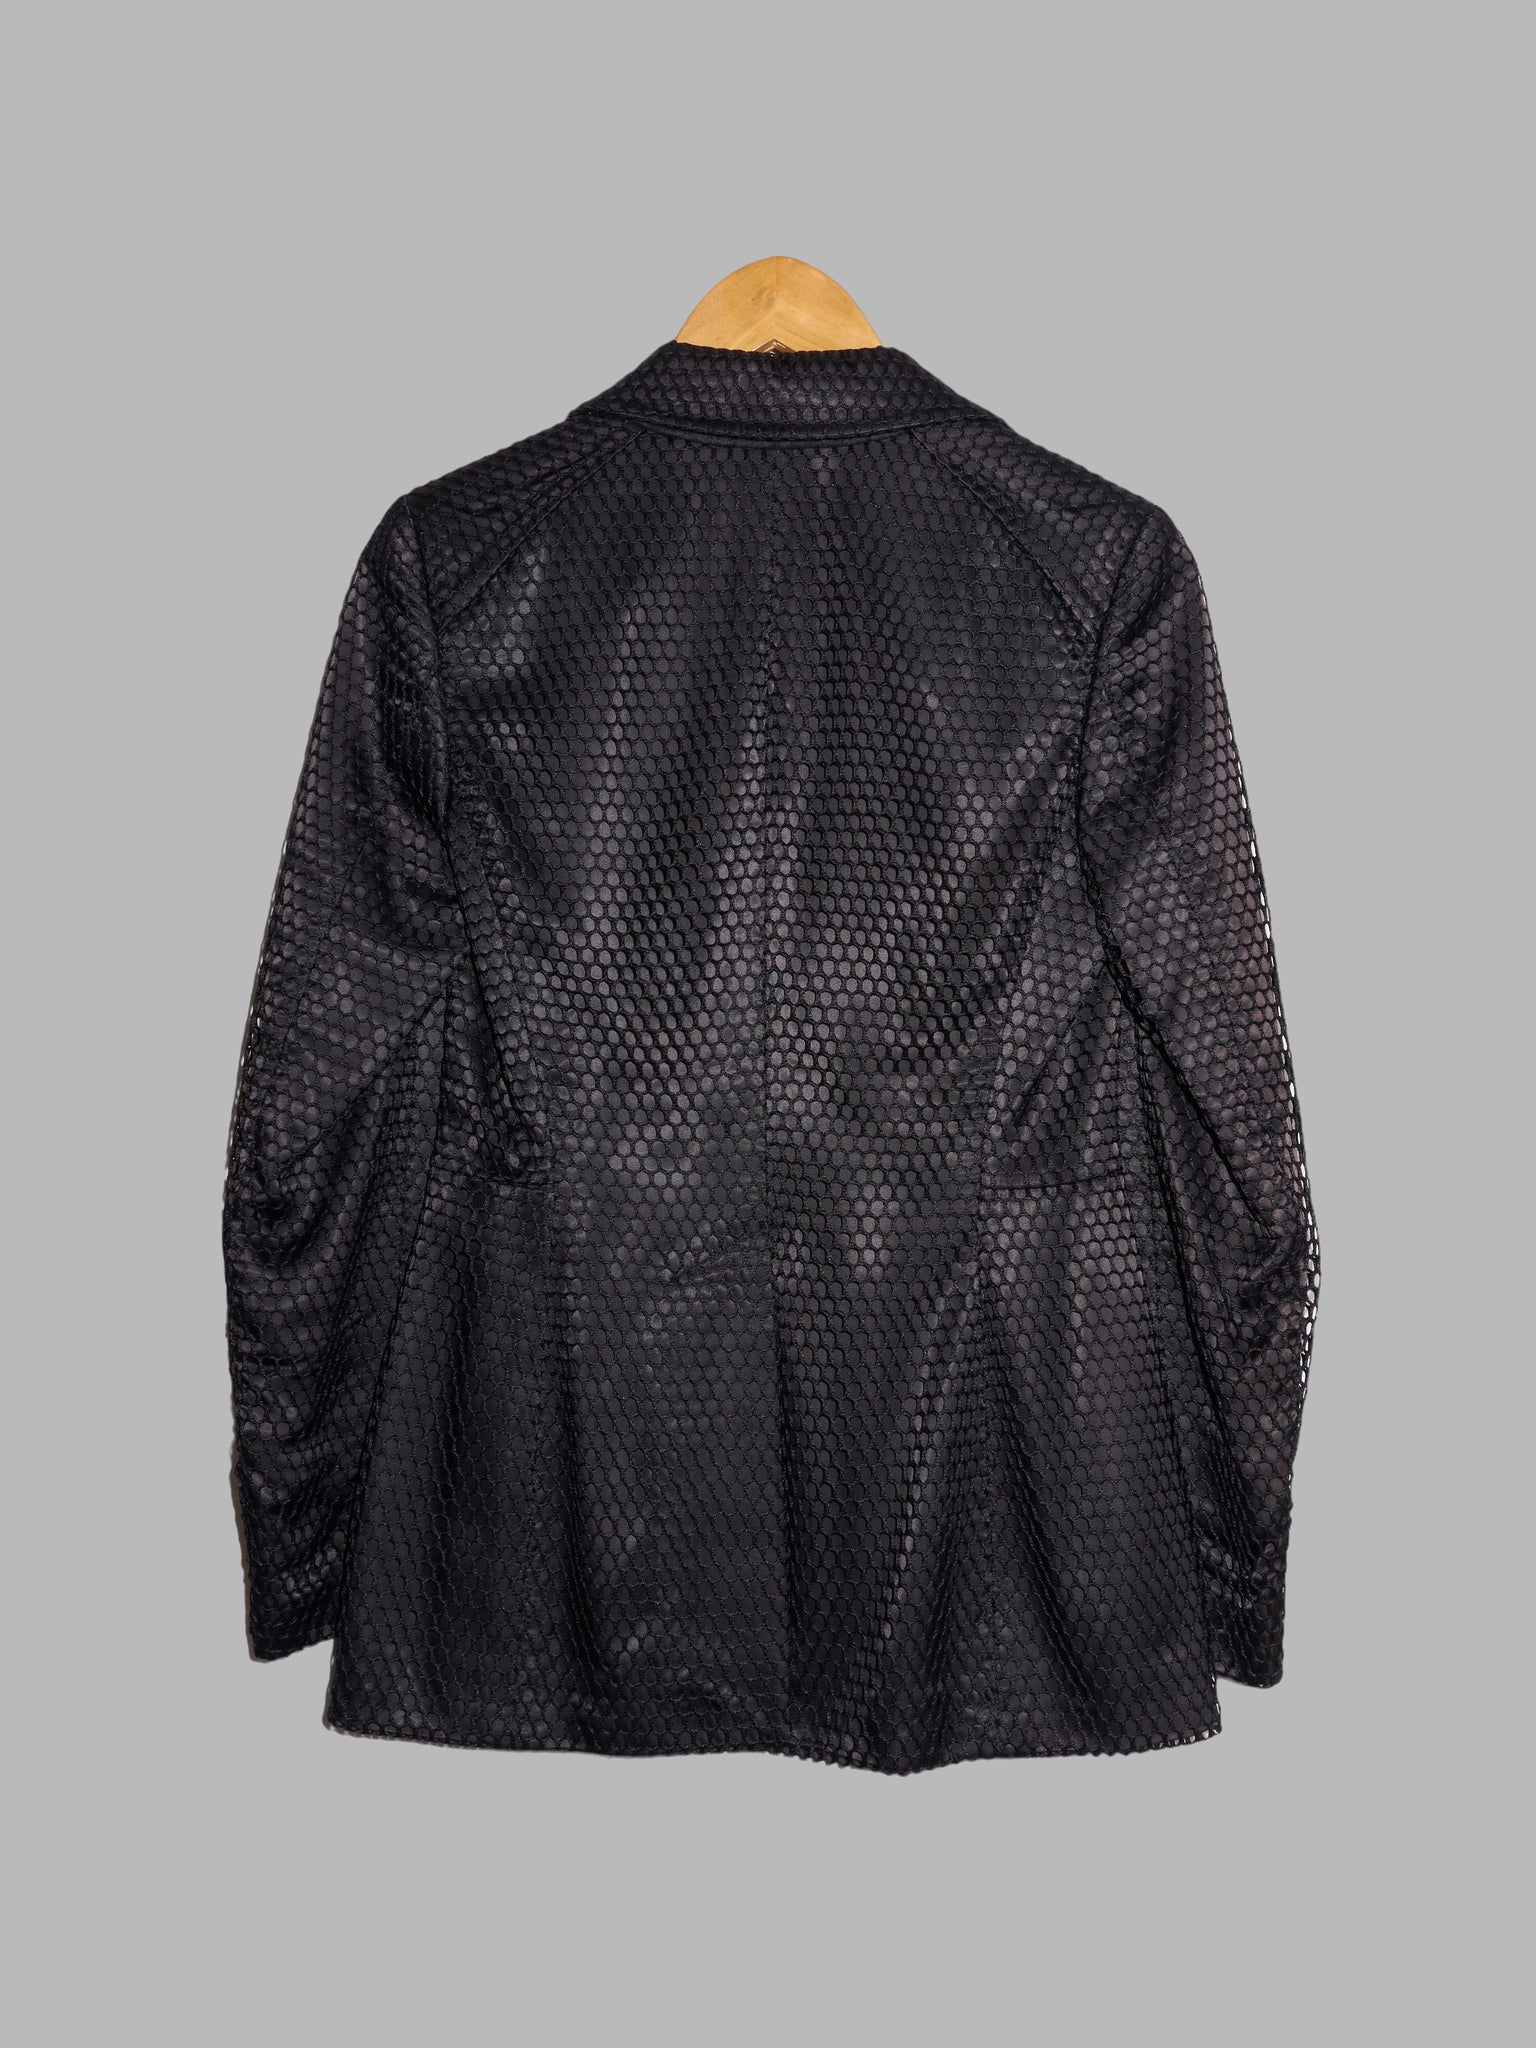 Dirk Bikkembergs spring 1996 black satin layered netting one button blazer